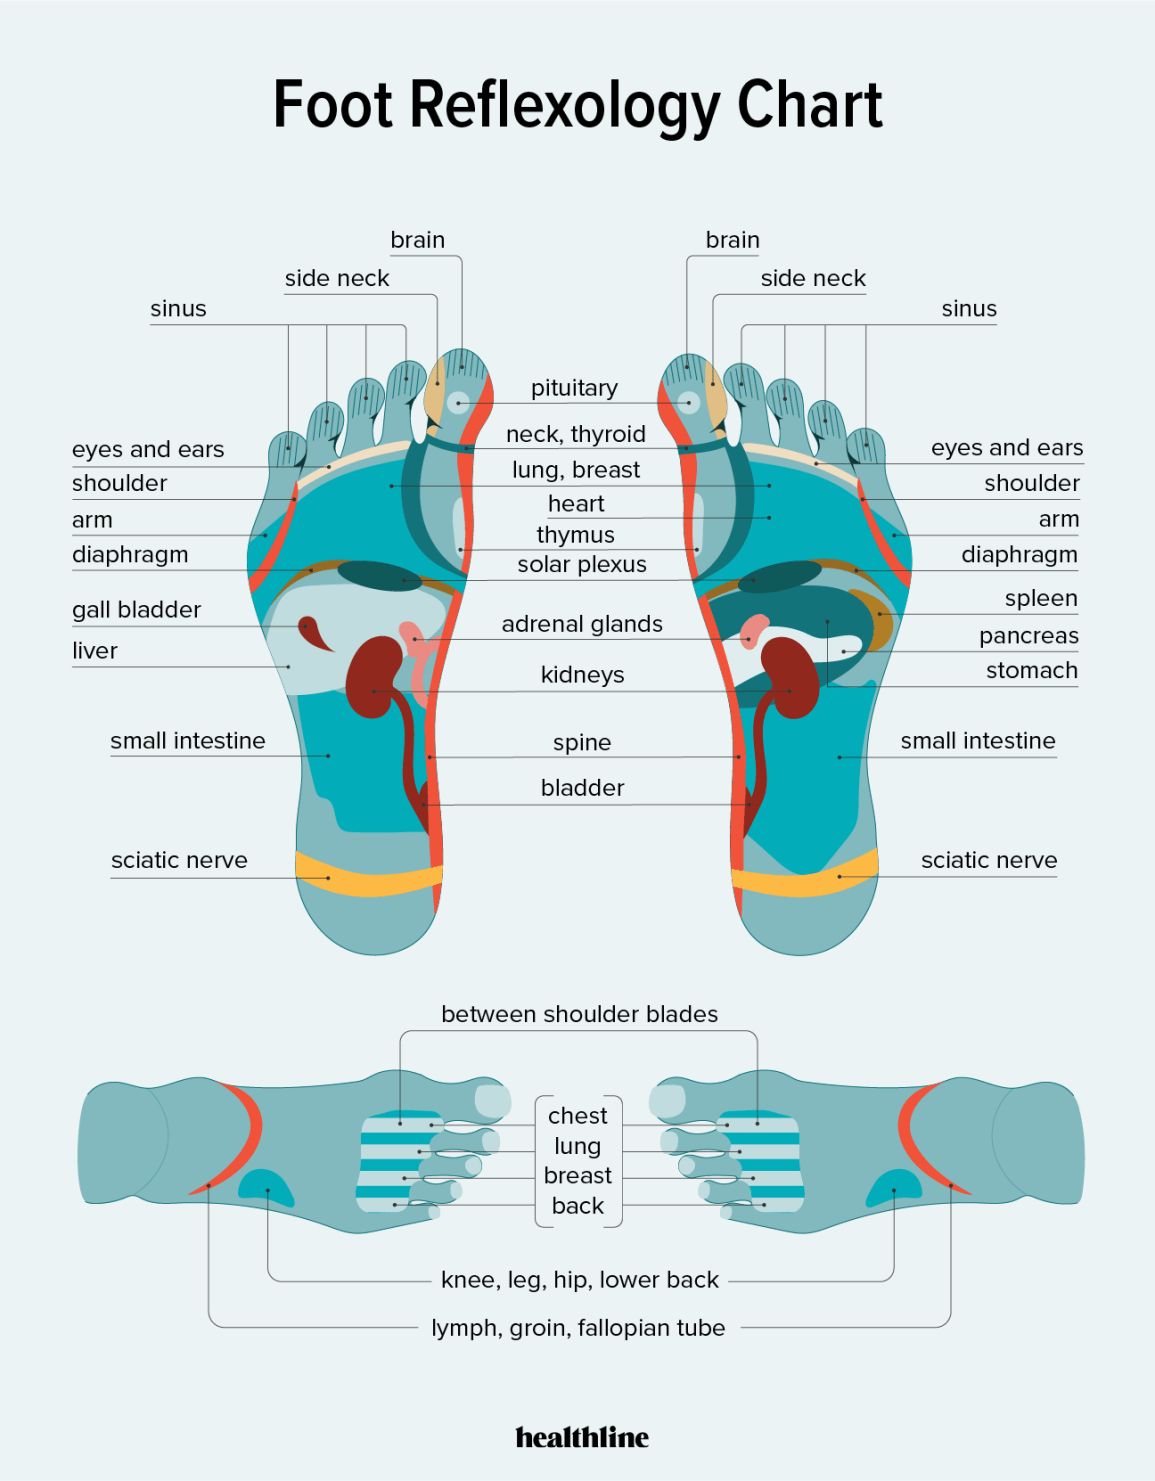 Discover the Benefits of Reflexology Foot Massage